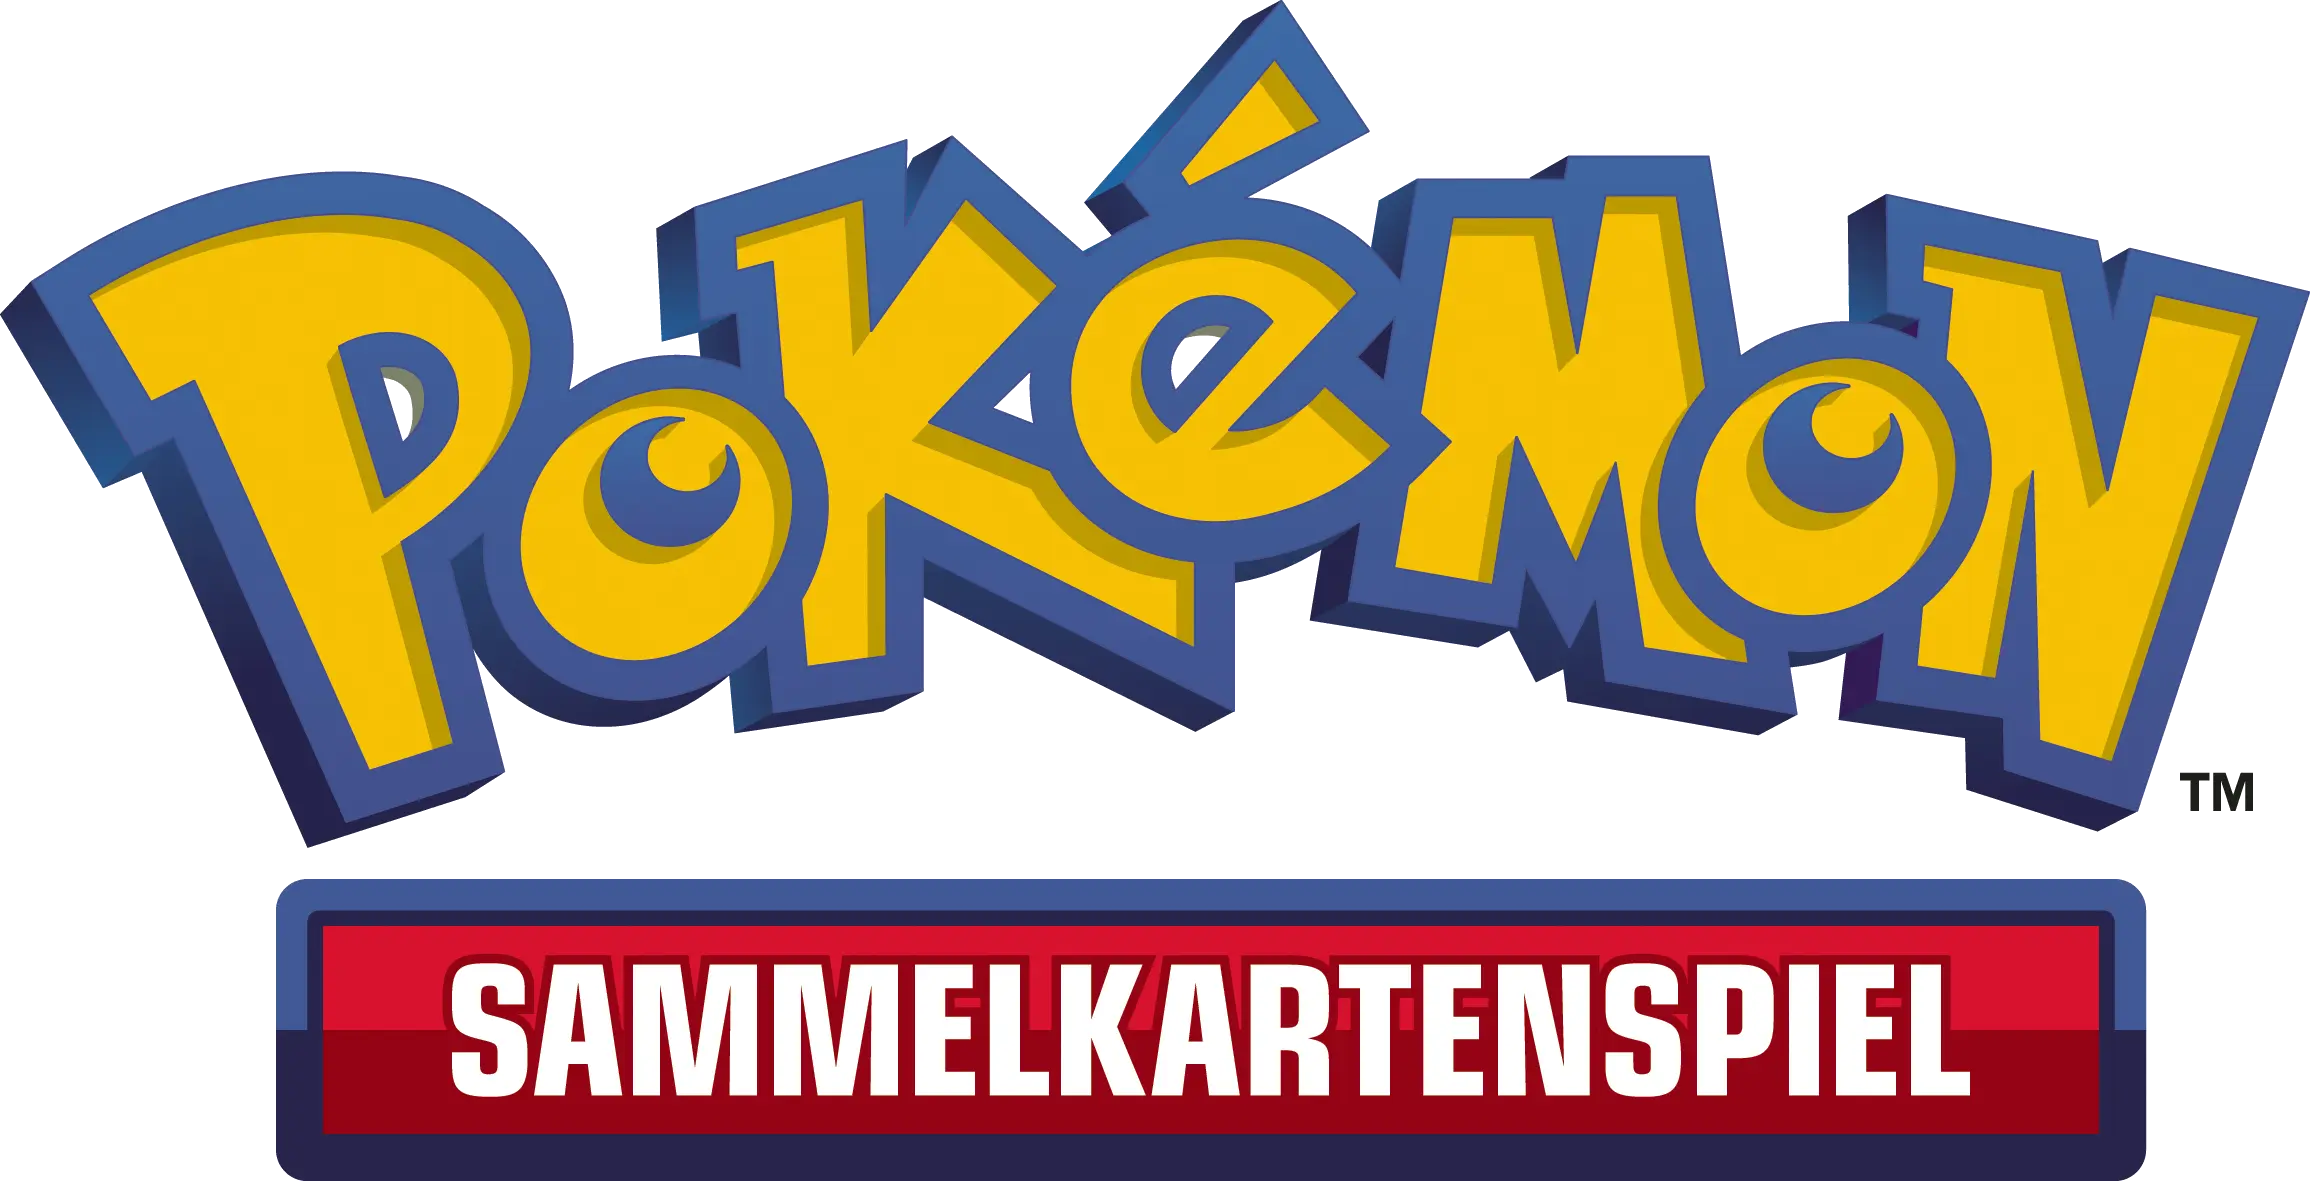 Pokémon TCG Logo